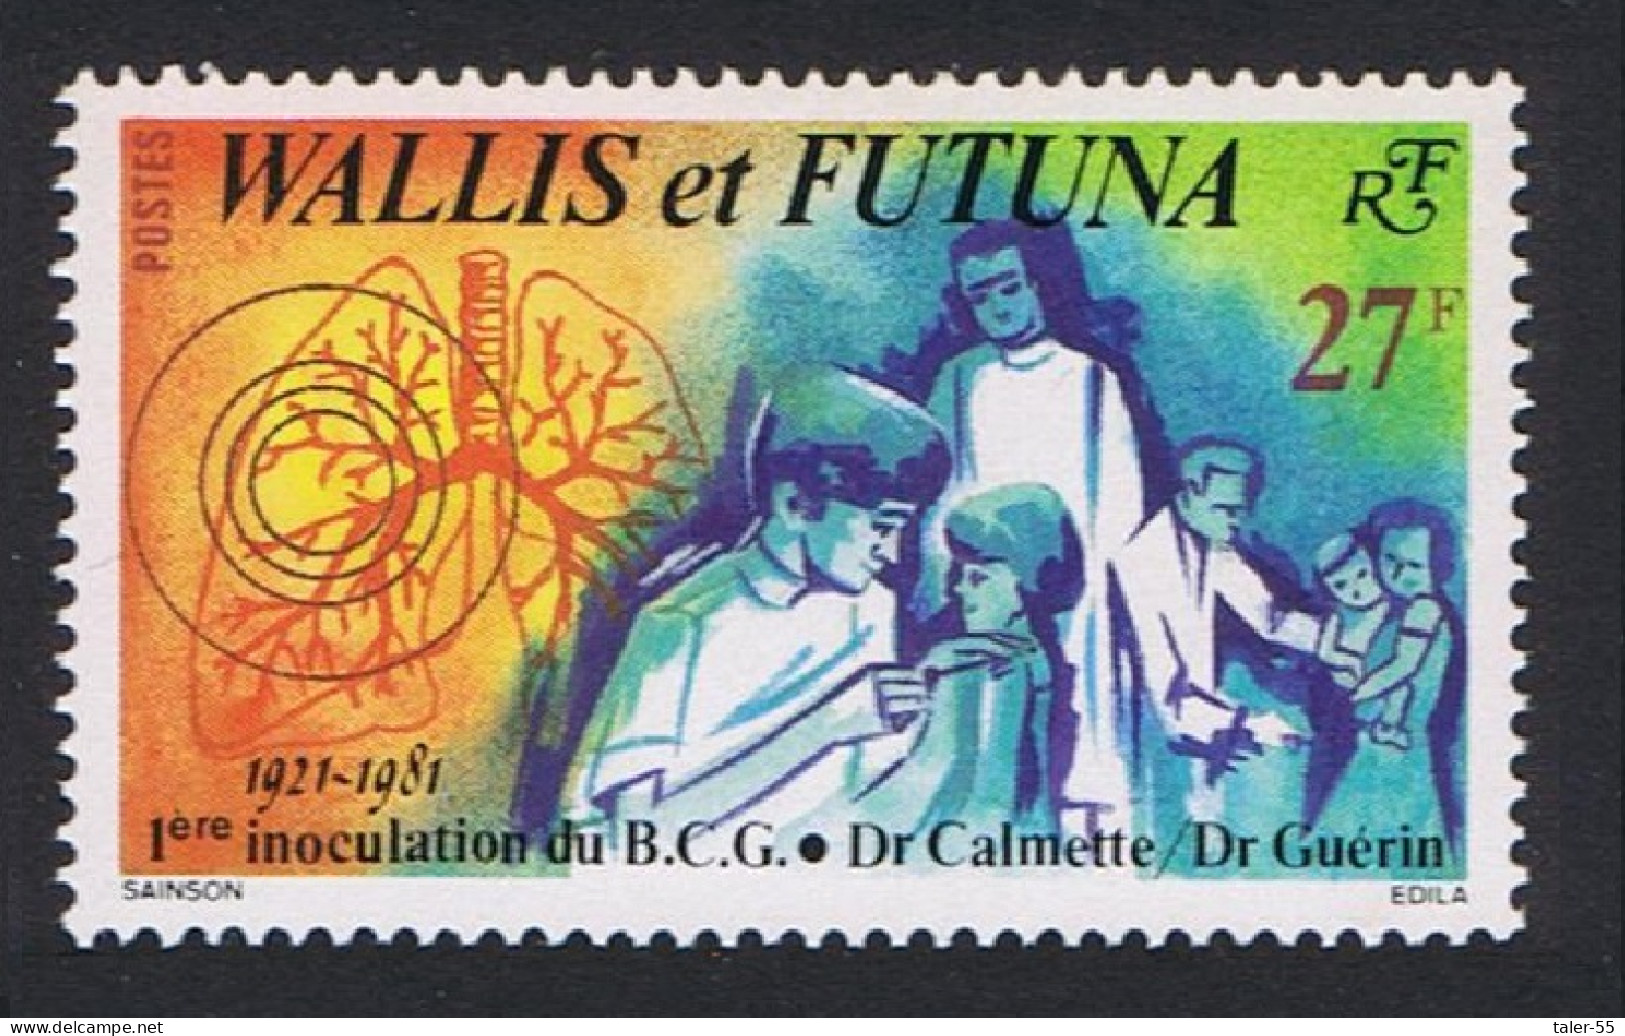 Wallis And Futuna BCG Anti Tuberculosis Inoculation 1981 MNH SG#376 Sc#270 - Ongebruikt